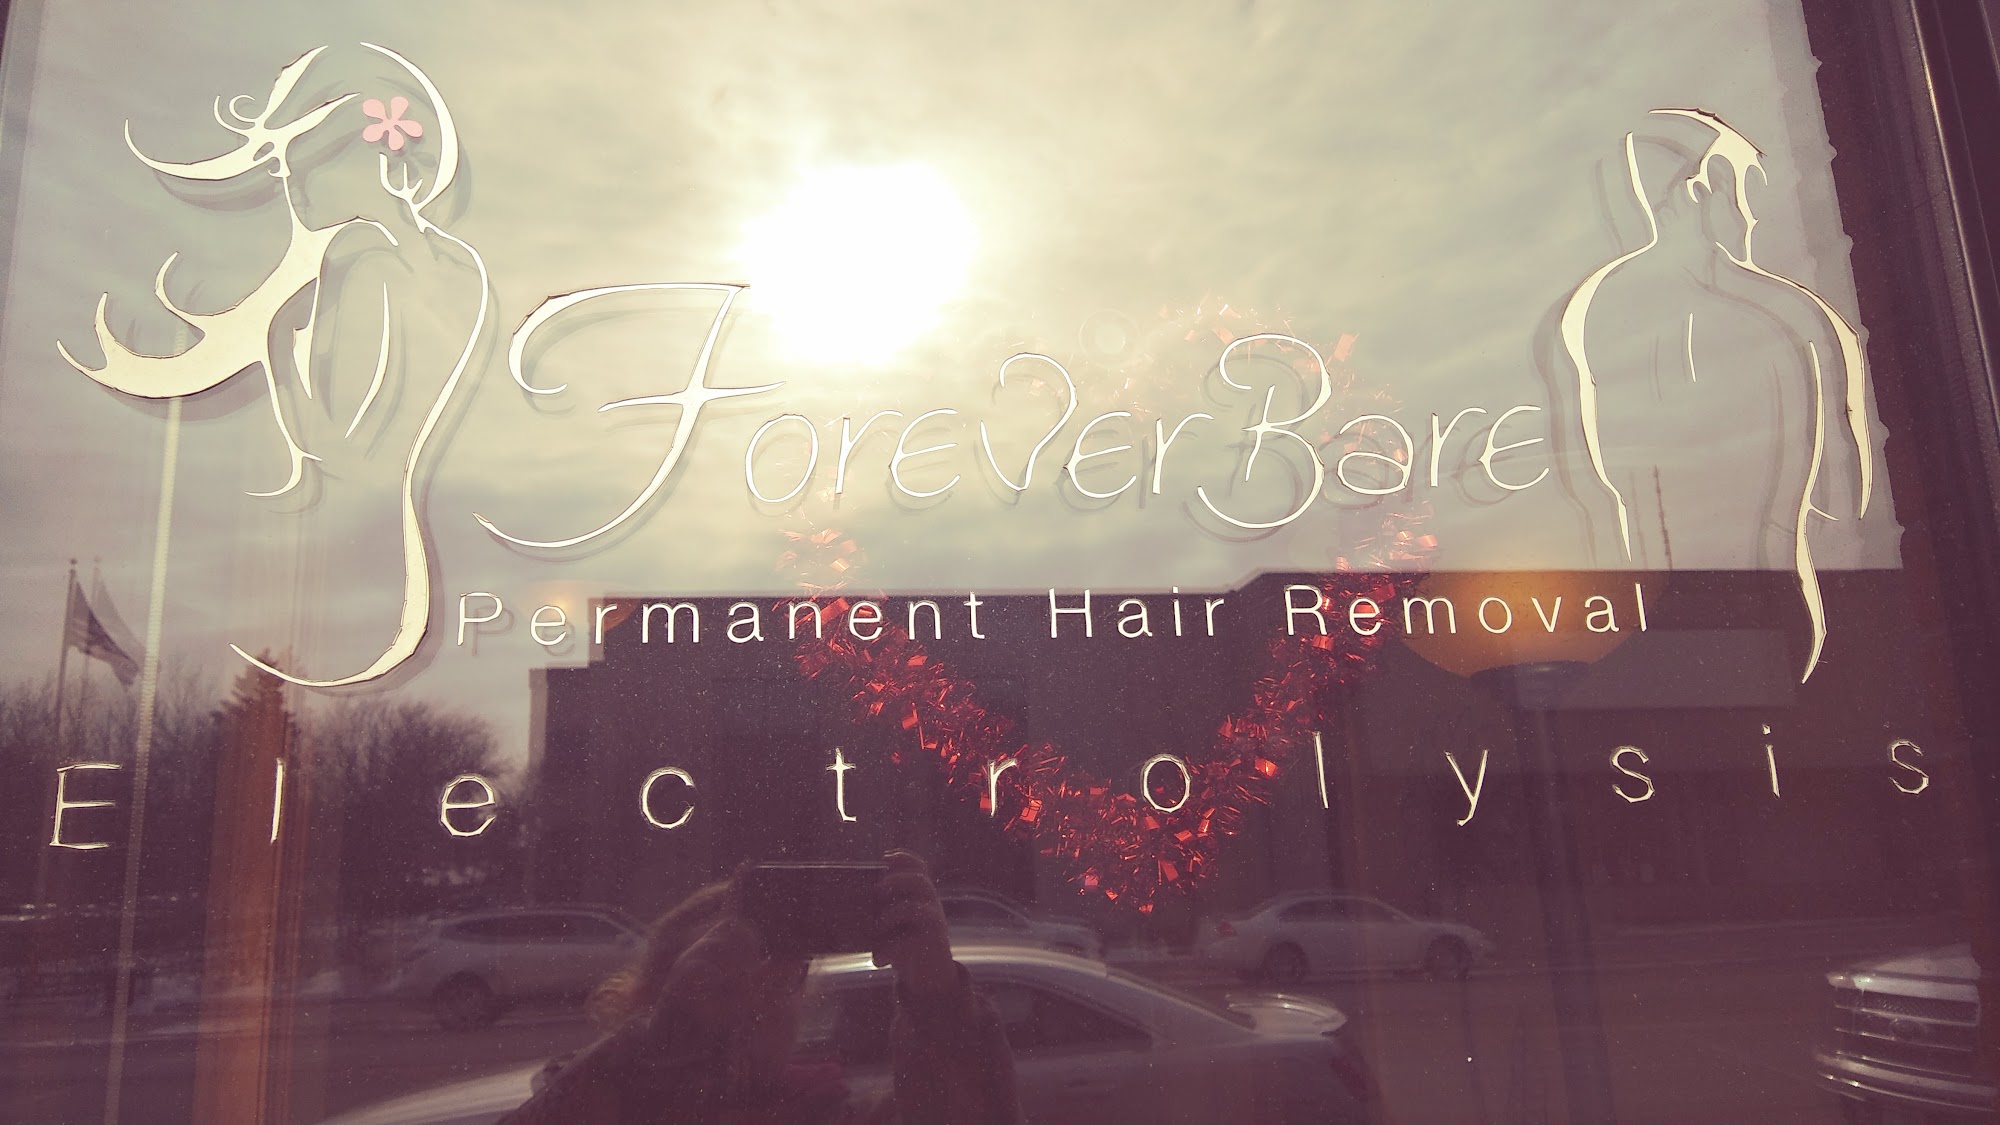 Forever Bare Permanent Hair Removal 905 Cloquet Ave, Cloquet Minnesota 55720